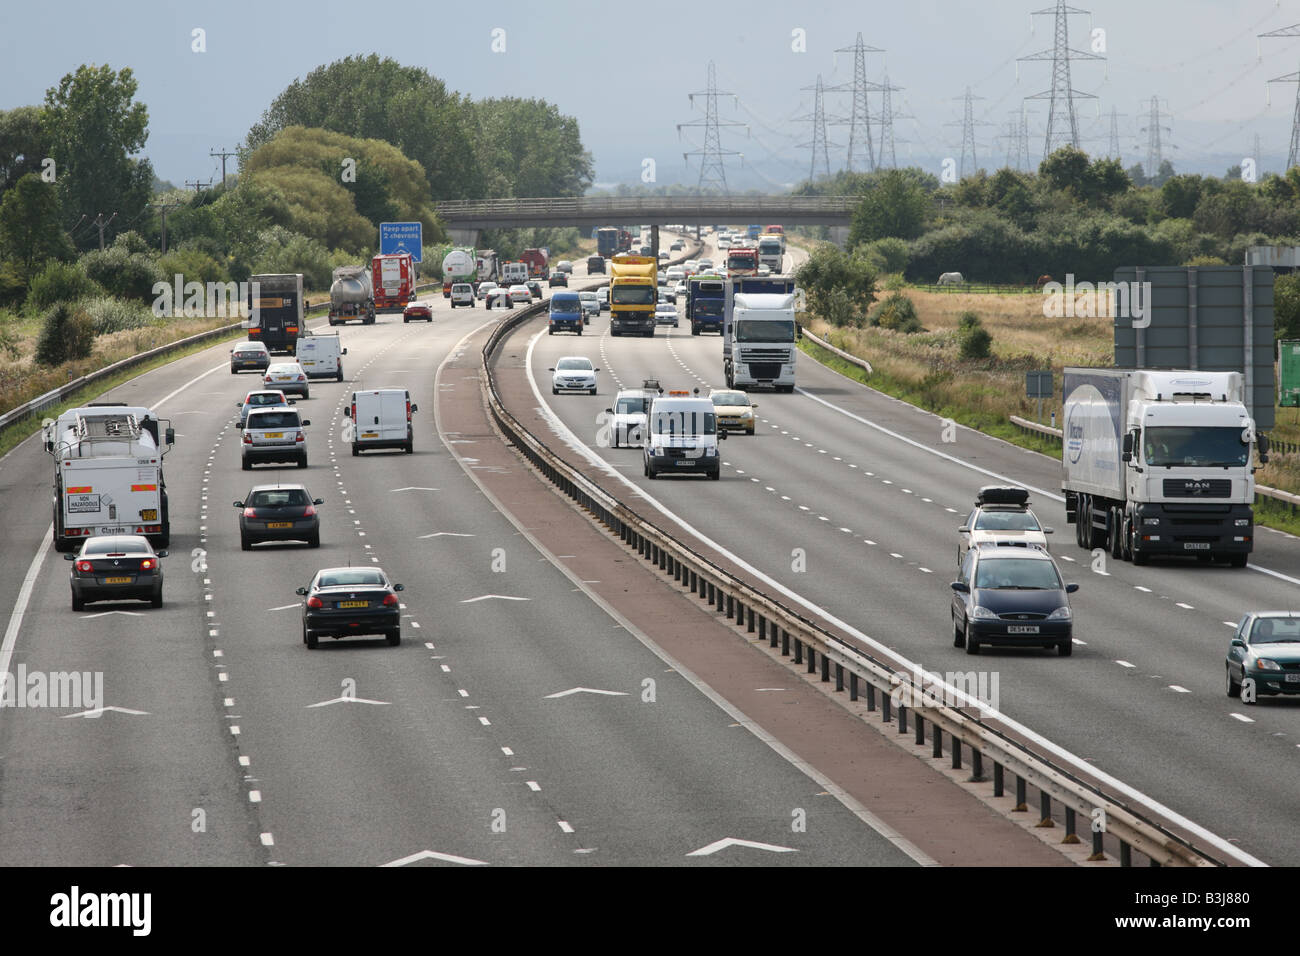 Keep apart 2 chevrons motorway road  markings and traffic on M56, Cheshire,UK Stock Photo